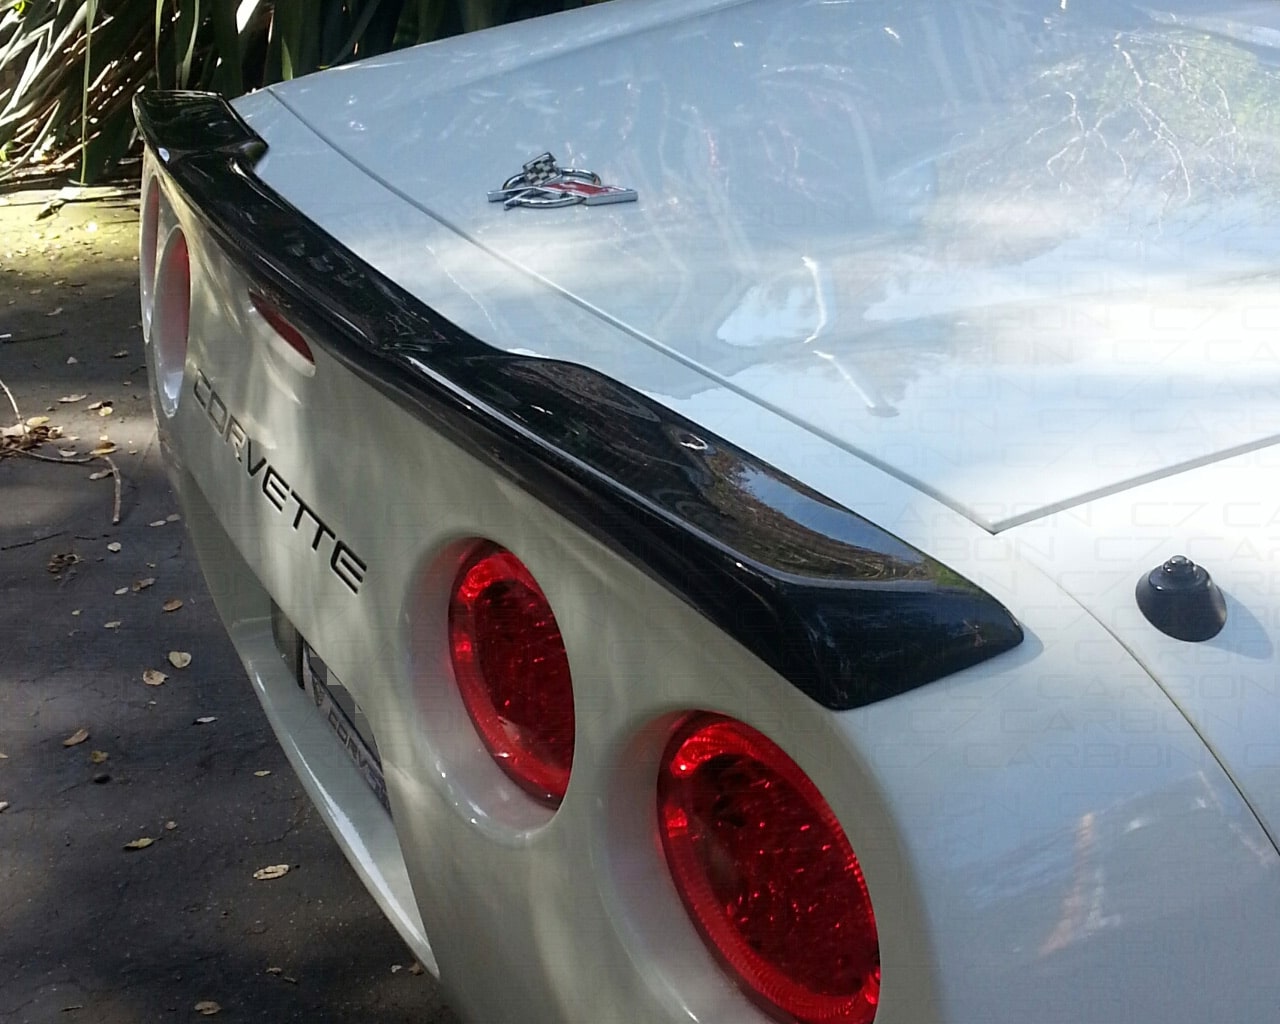 Corvette ZR1 Style Spoiler - Carbon Fiber : 1997-2004 C5, Z06